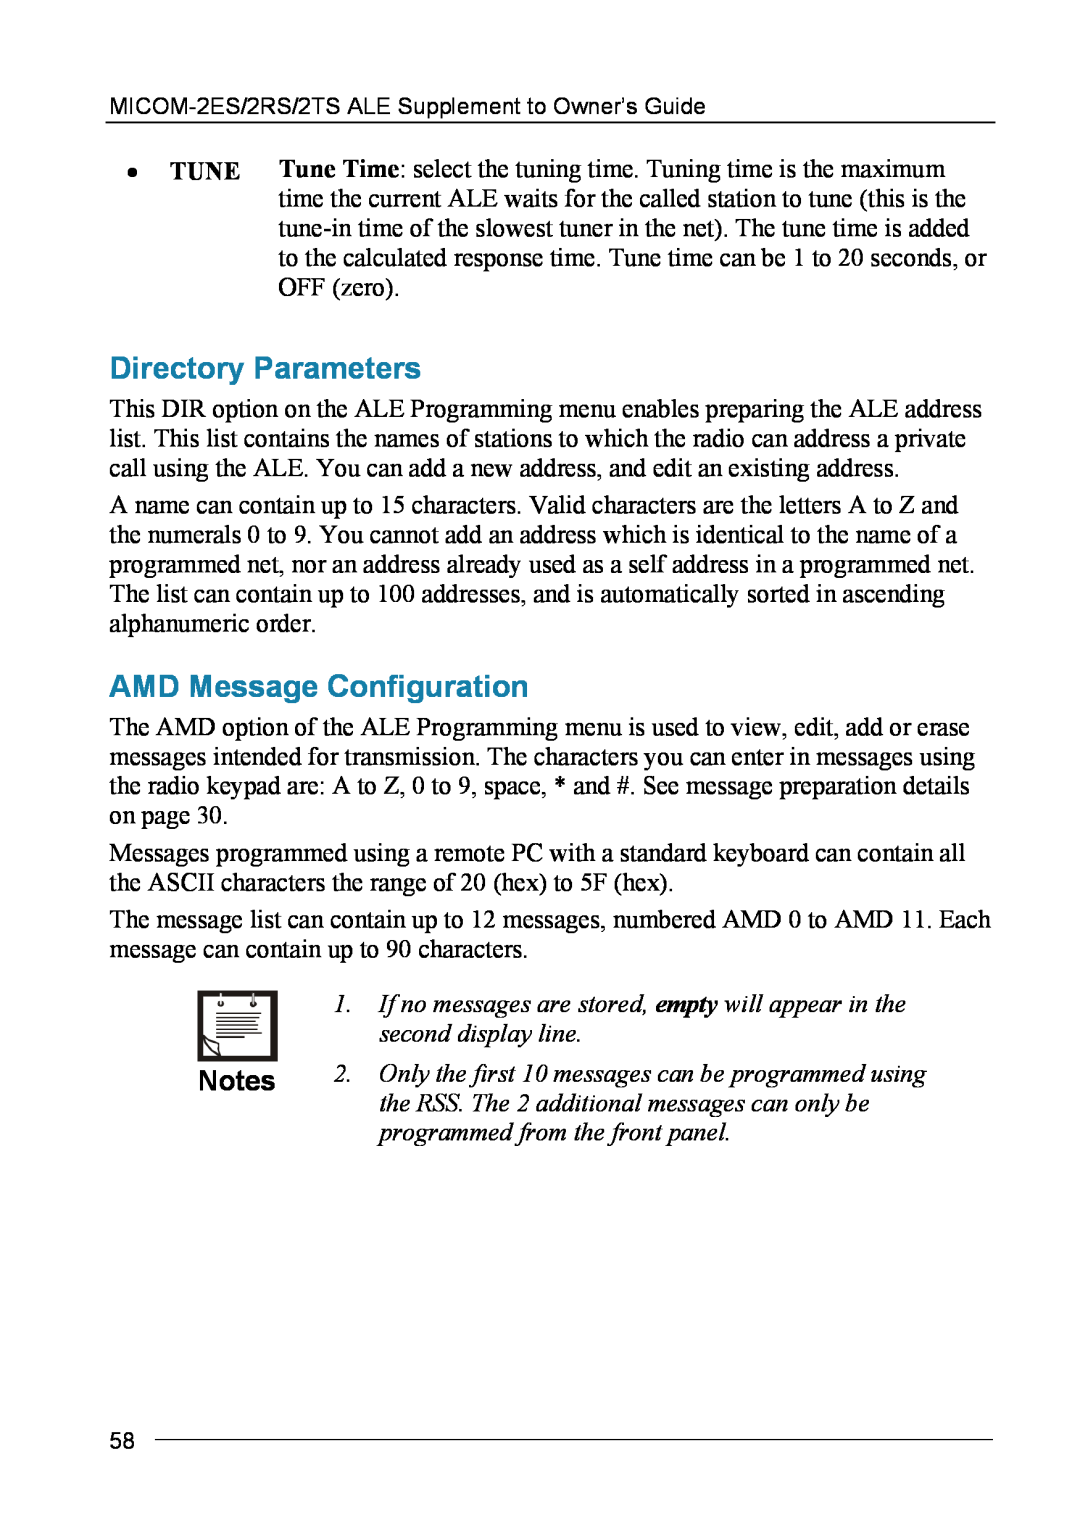 Motorola MICOM-2ES/2RS/2TS ALE manual Directory Parameters, AMD Message Configuration 